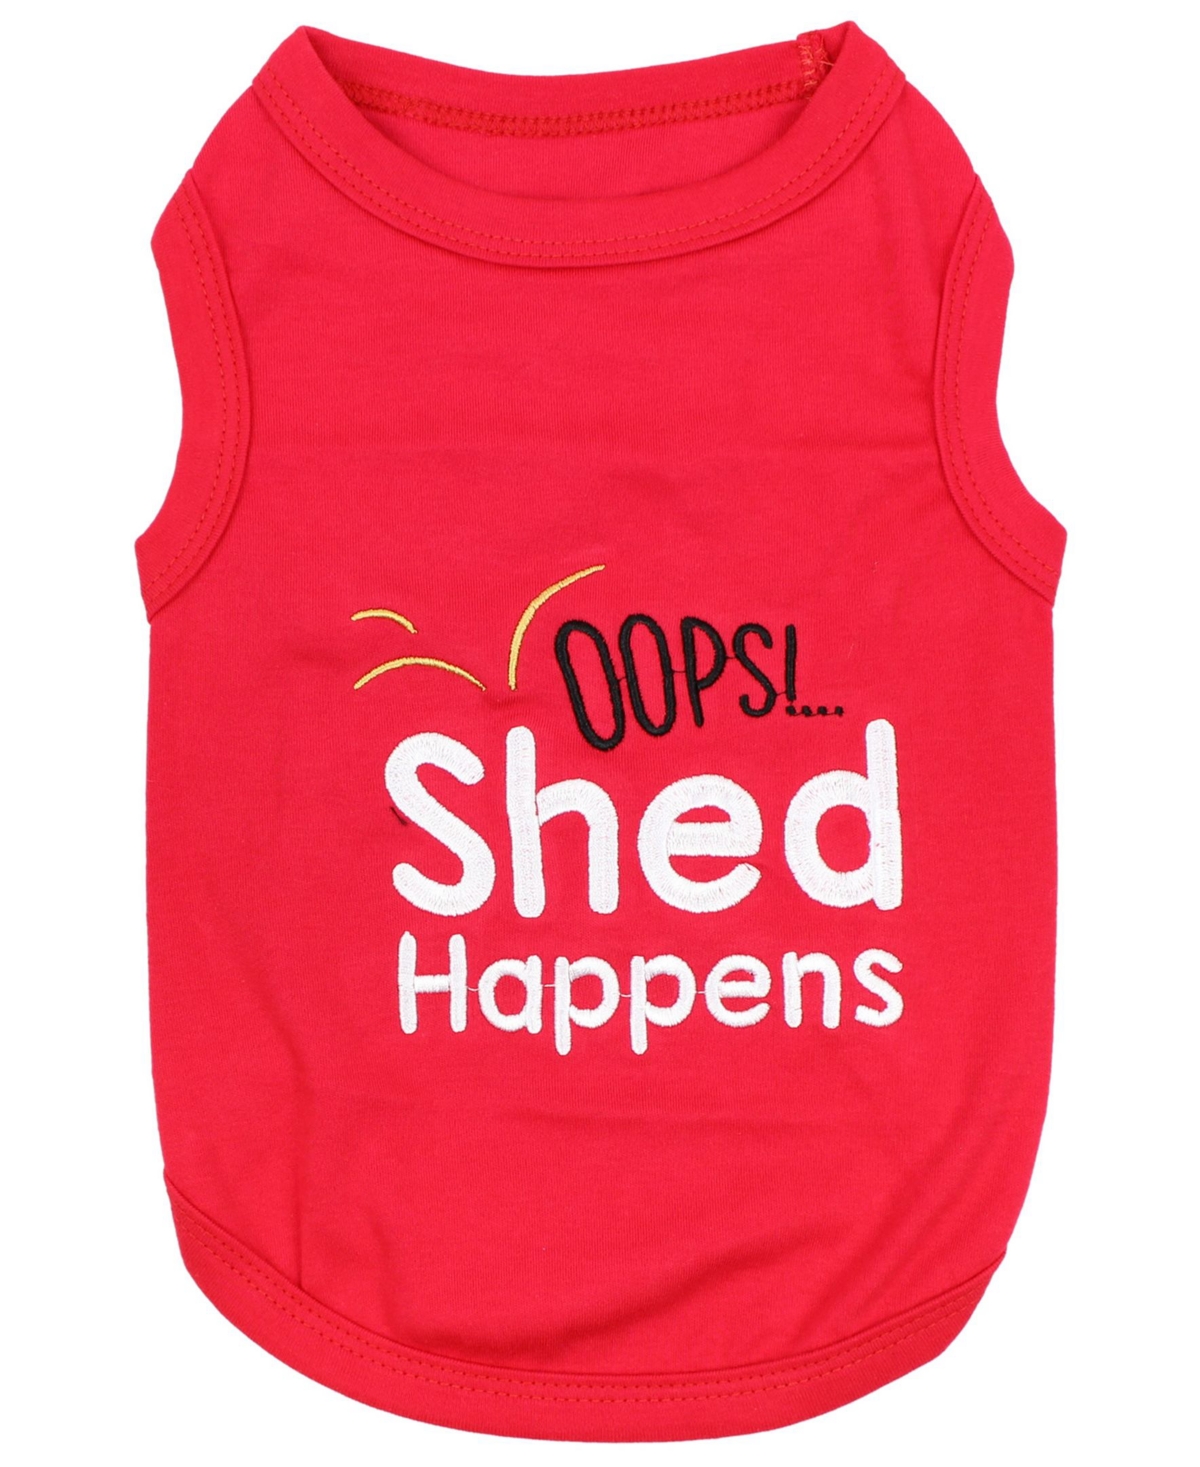 Shed Happens Dog T-Shirt - Red